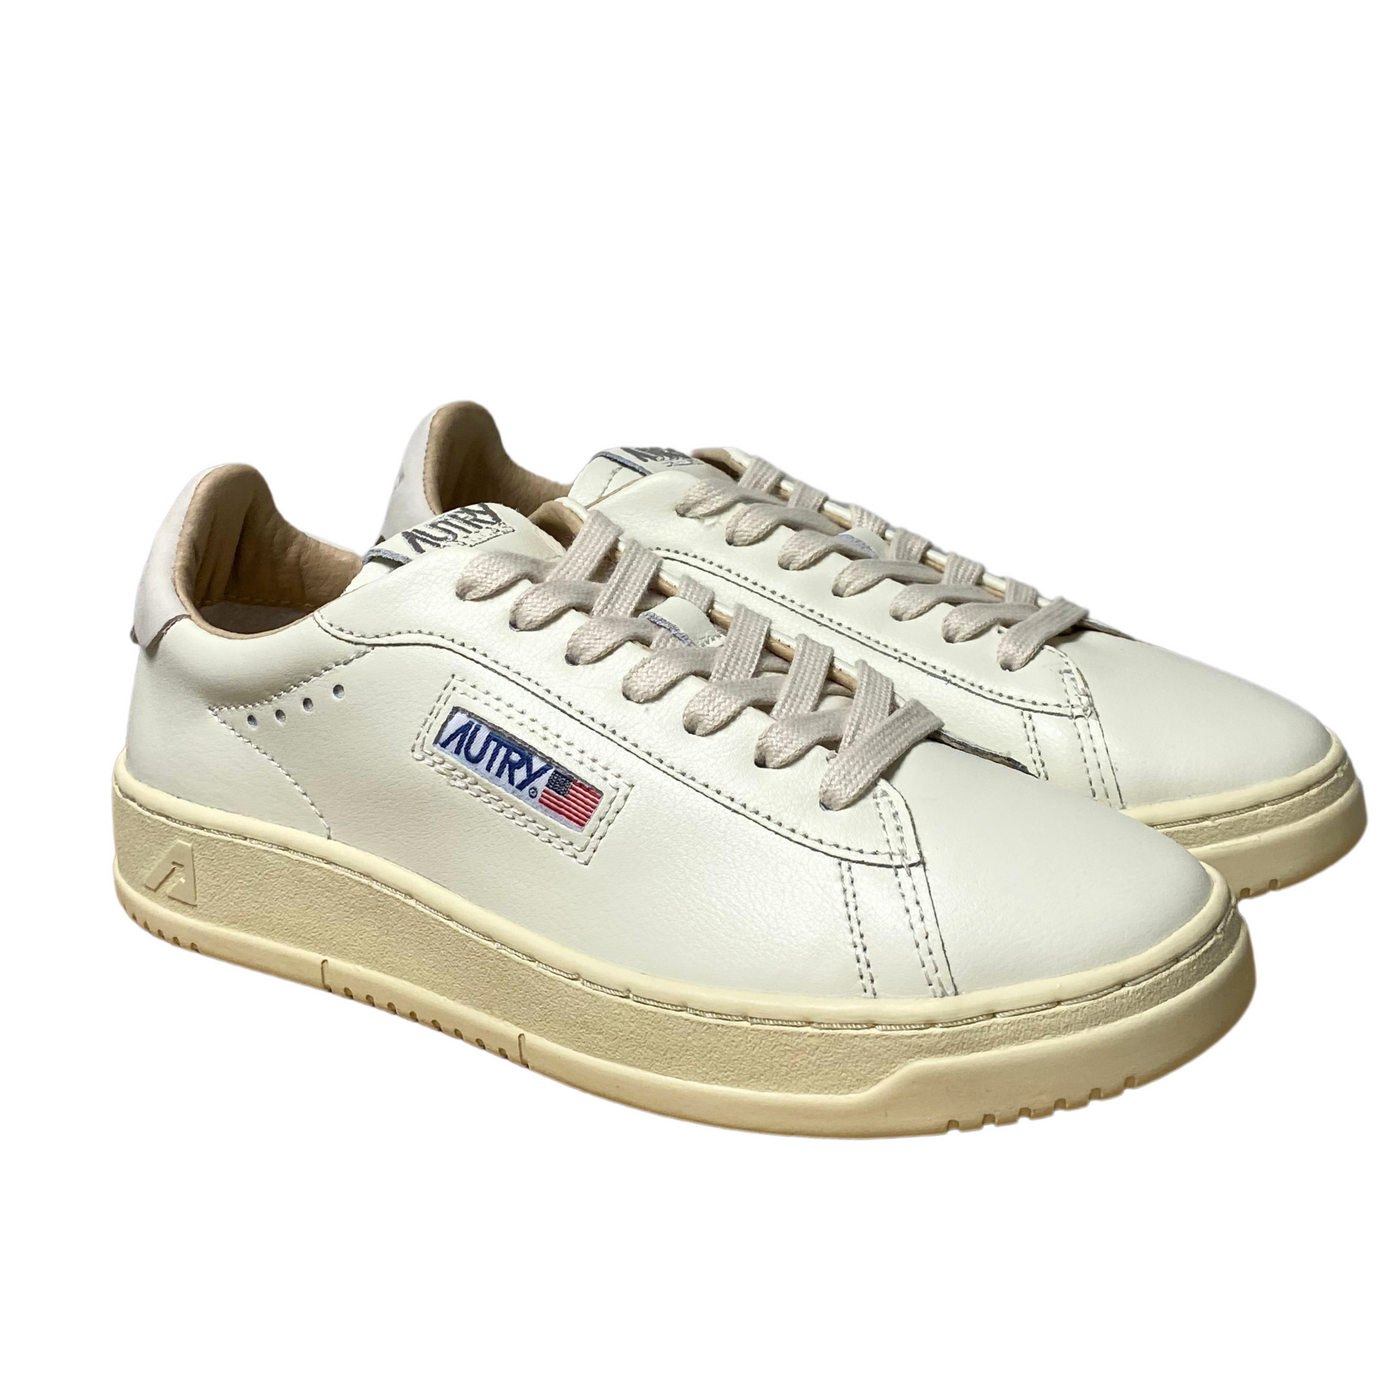 Autry Sneakers ADLMMR01 Hvid